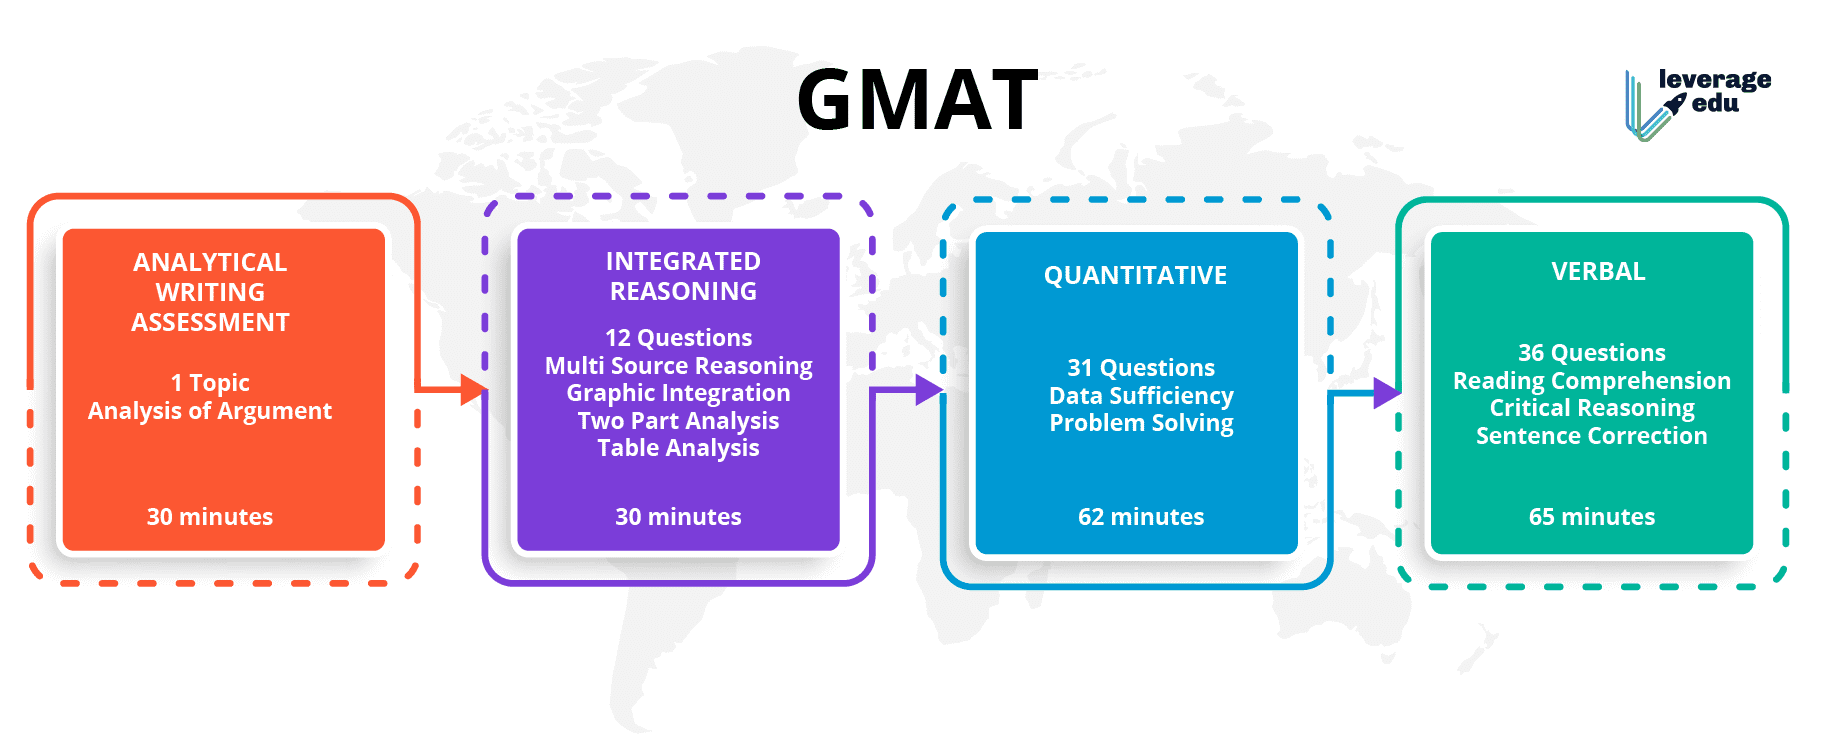 GMAT Syllabus 2021 [Updated Version] Leverage Edu